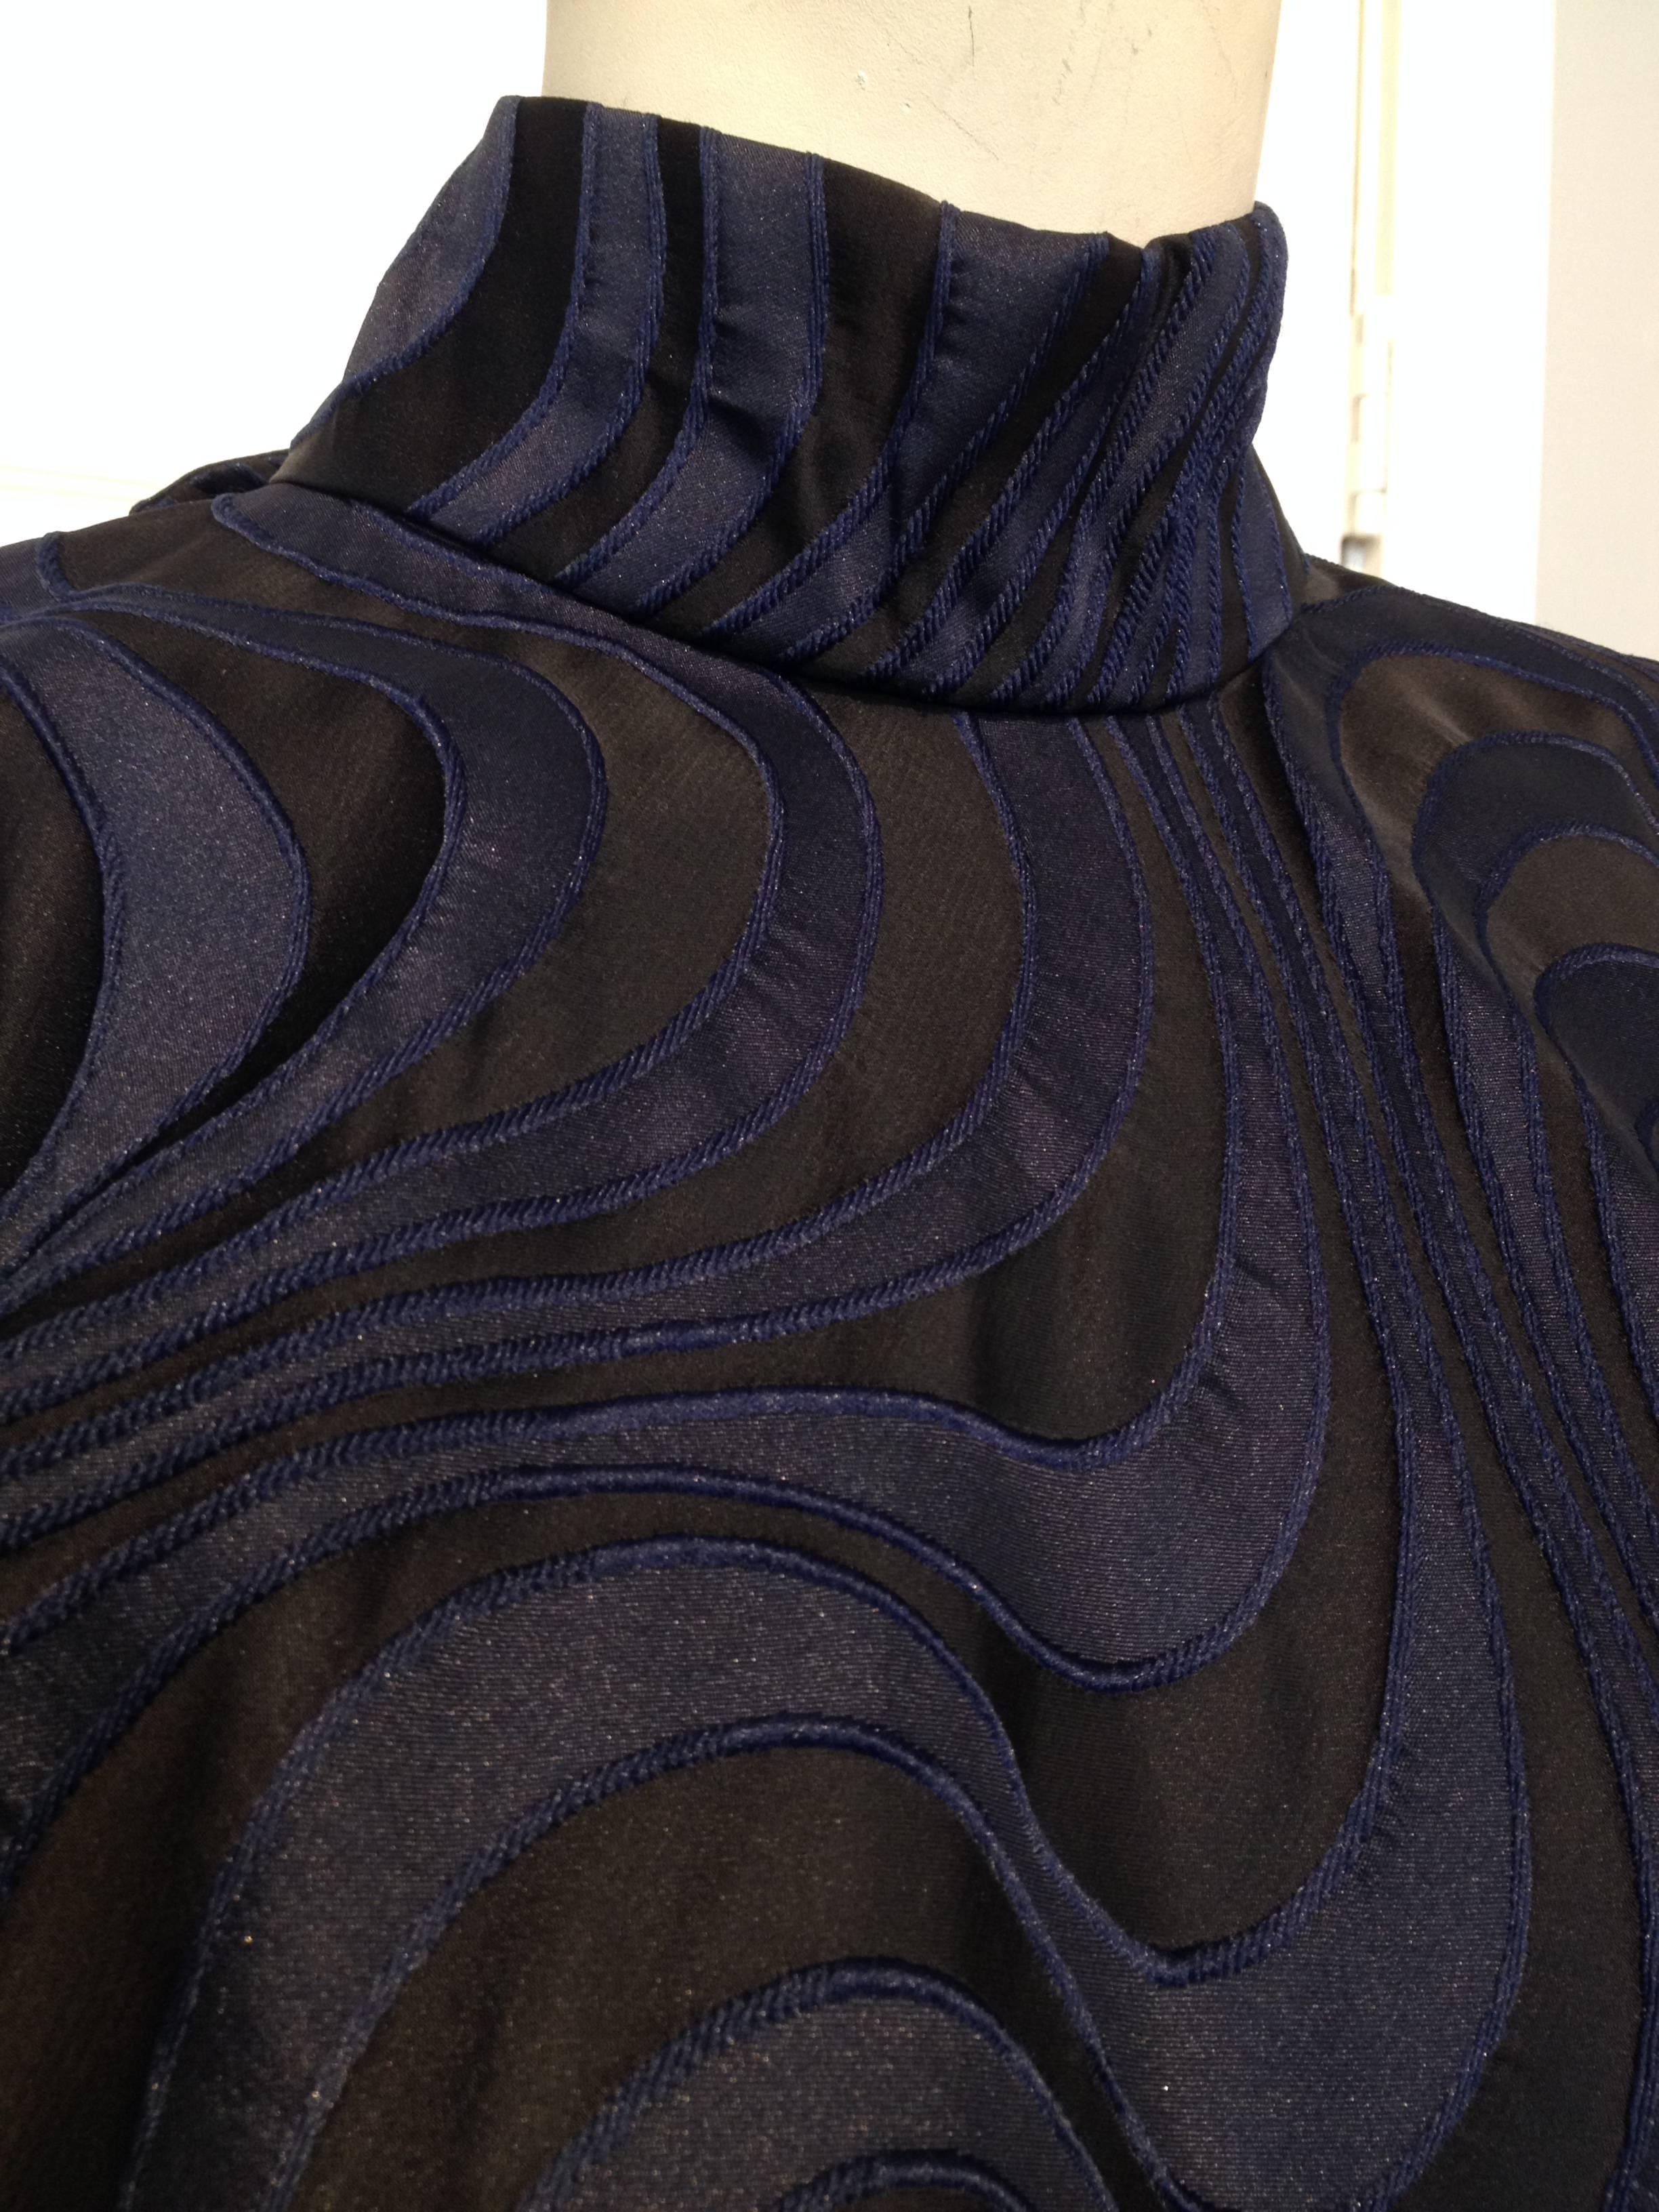 Vionnet Navy and Black Swirled Dress Size 44 (8) 1